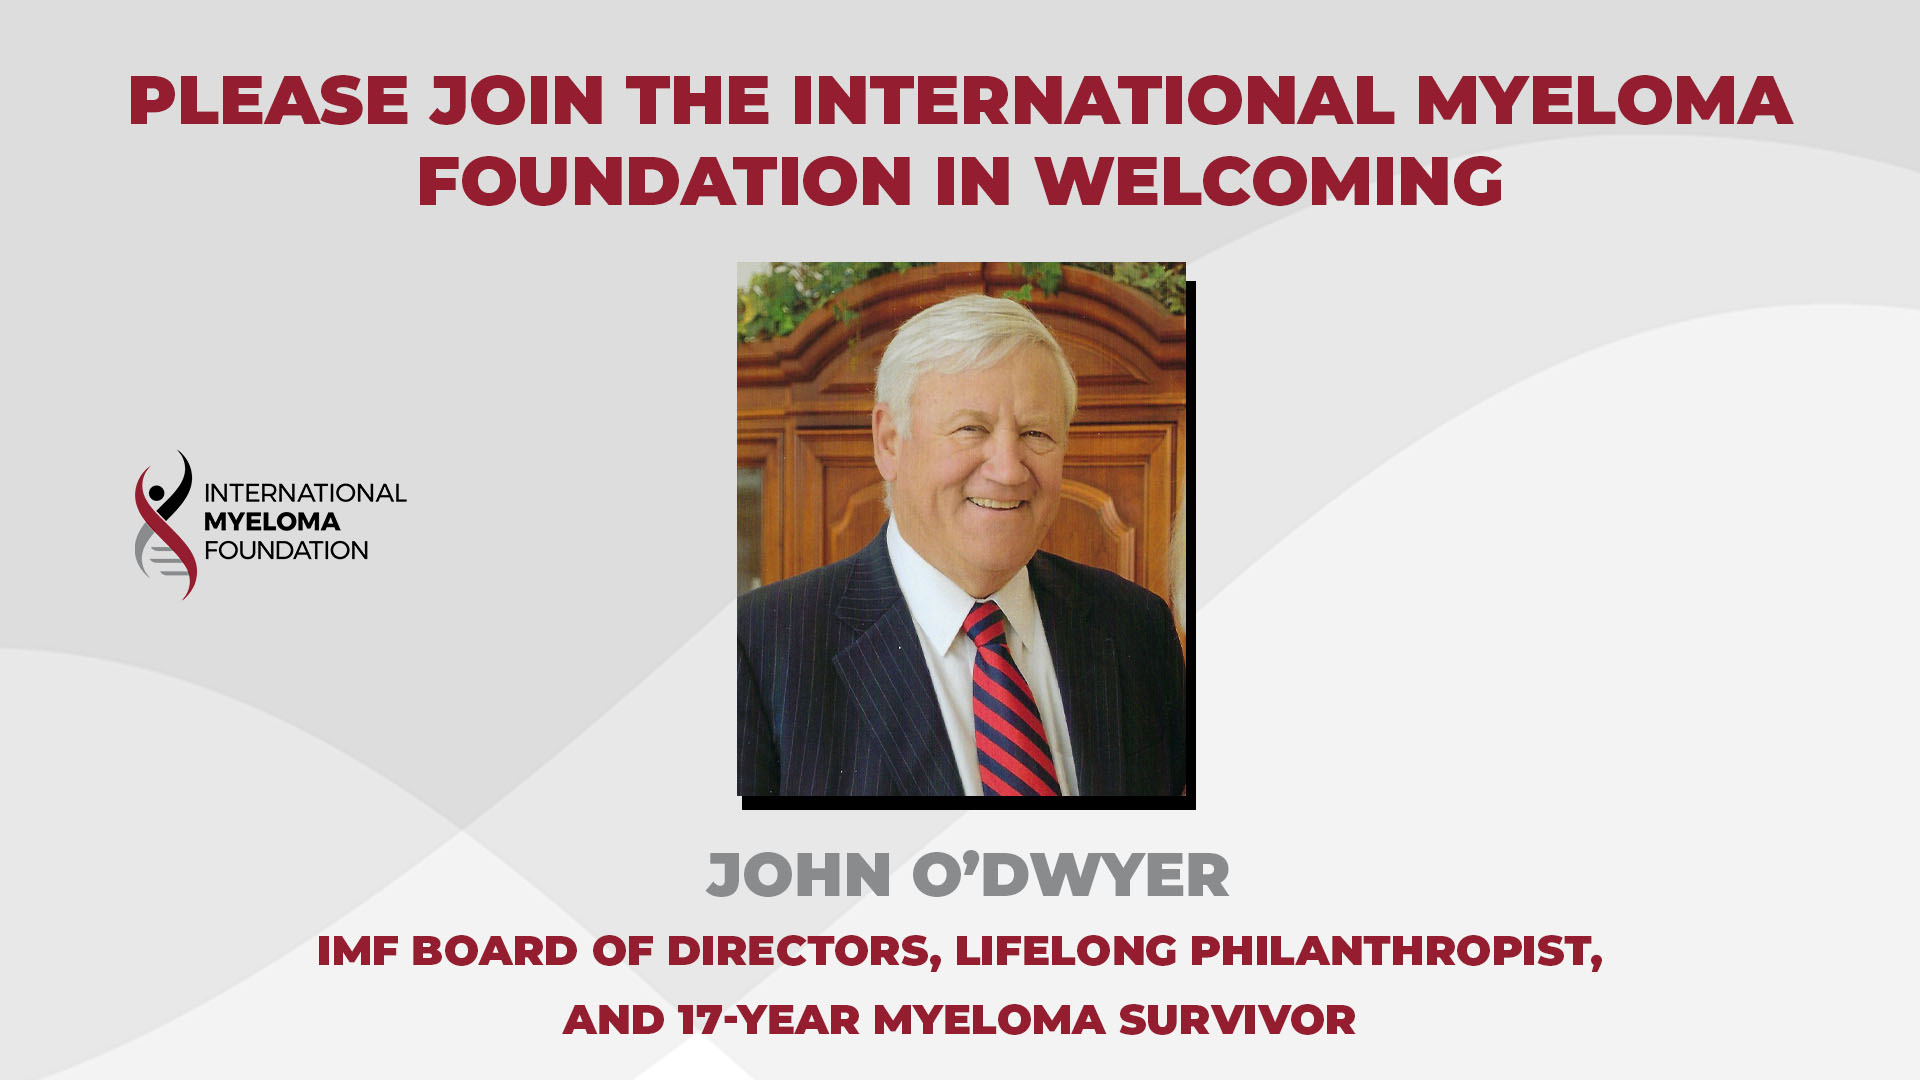 International Myeloma Foundation (IMF) welcomes lifelong philanthropist and myeloma survivor John O'Dwyer to the IMF Board of Directors.